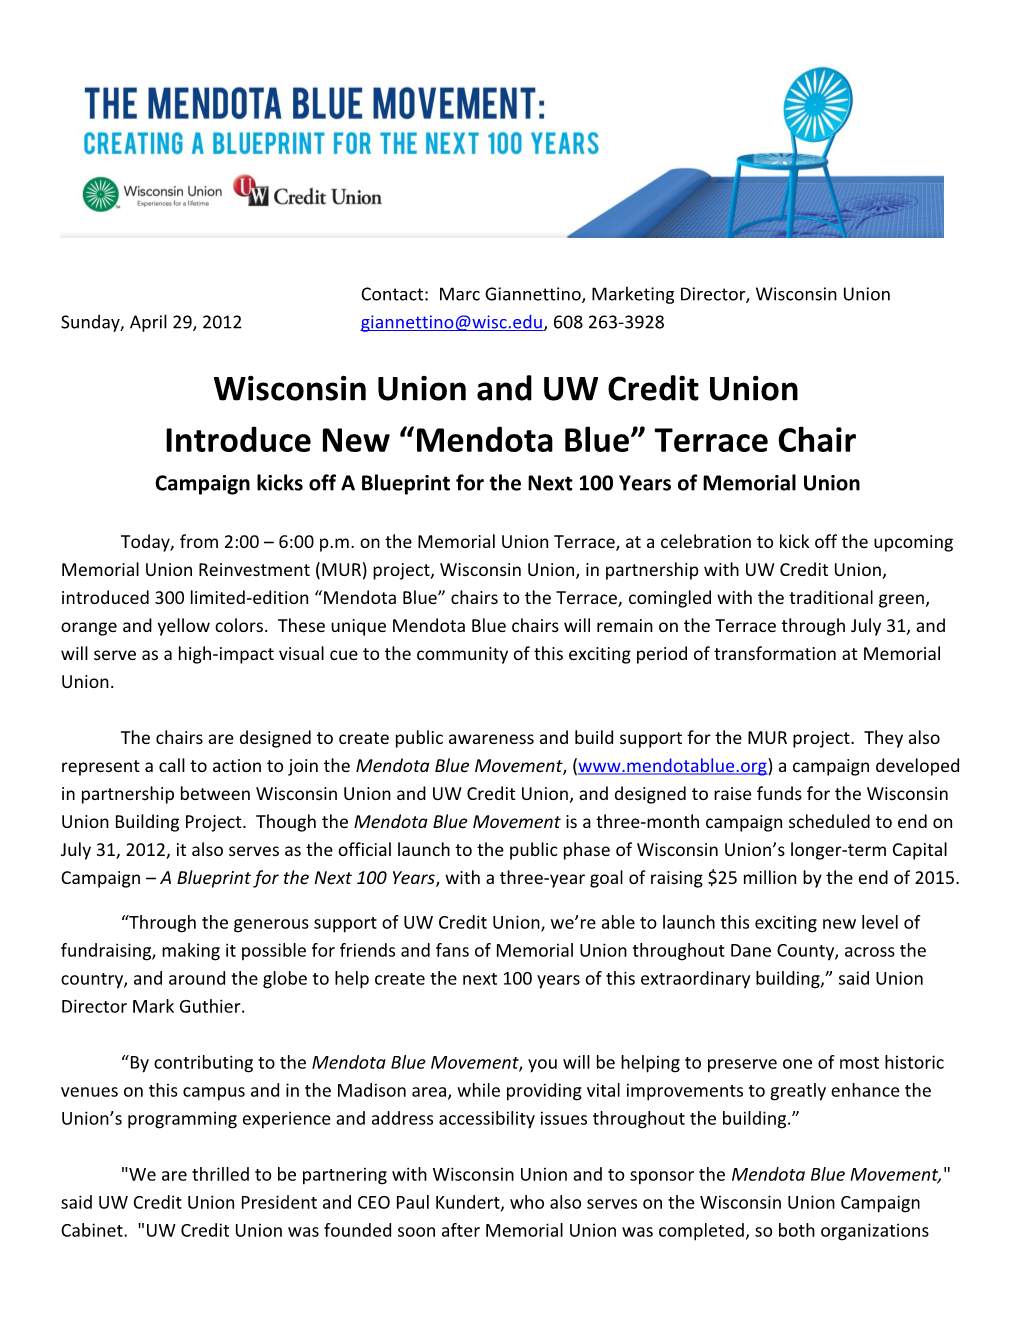 Wisconsin Union and UW Credit Union